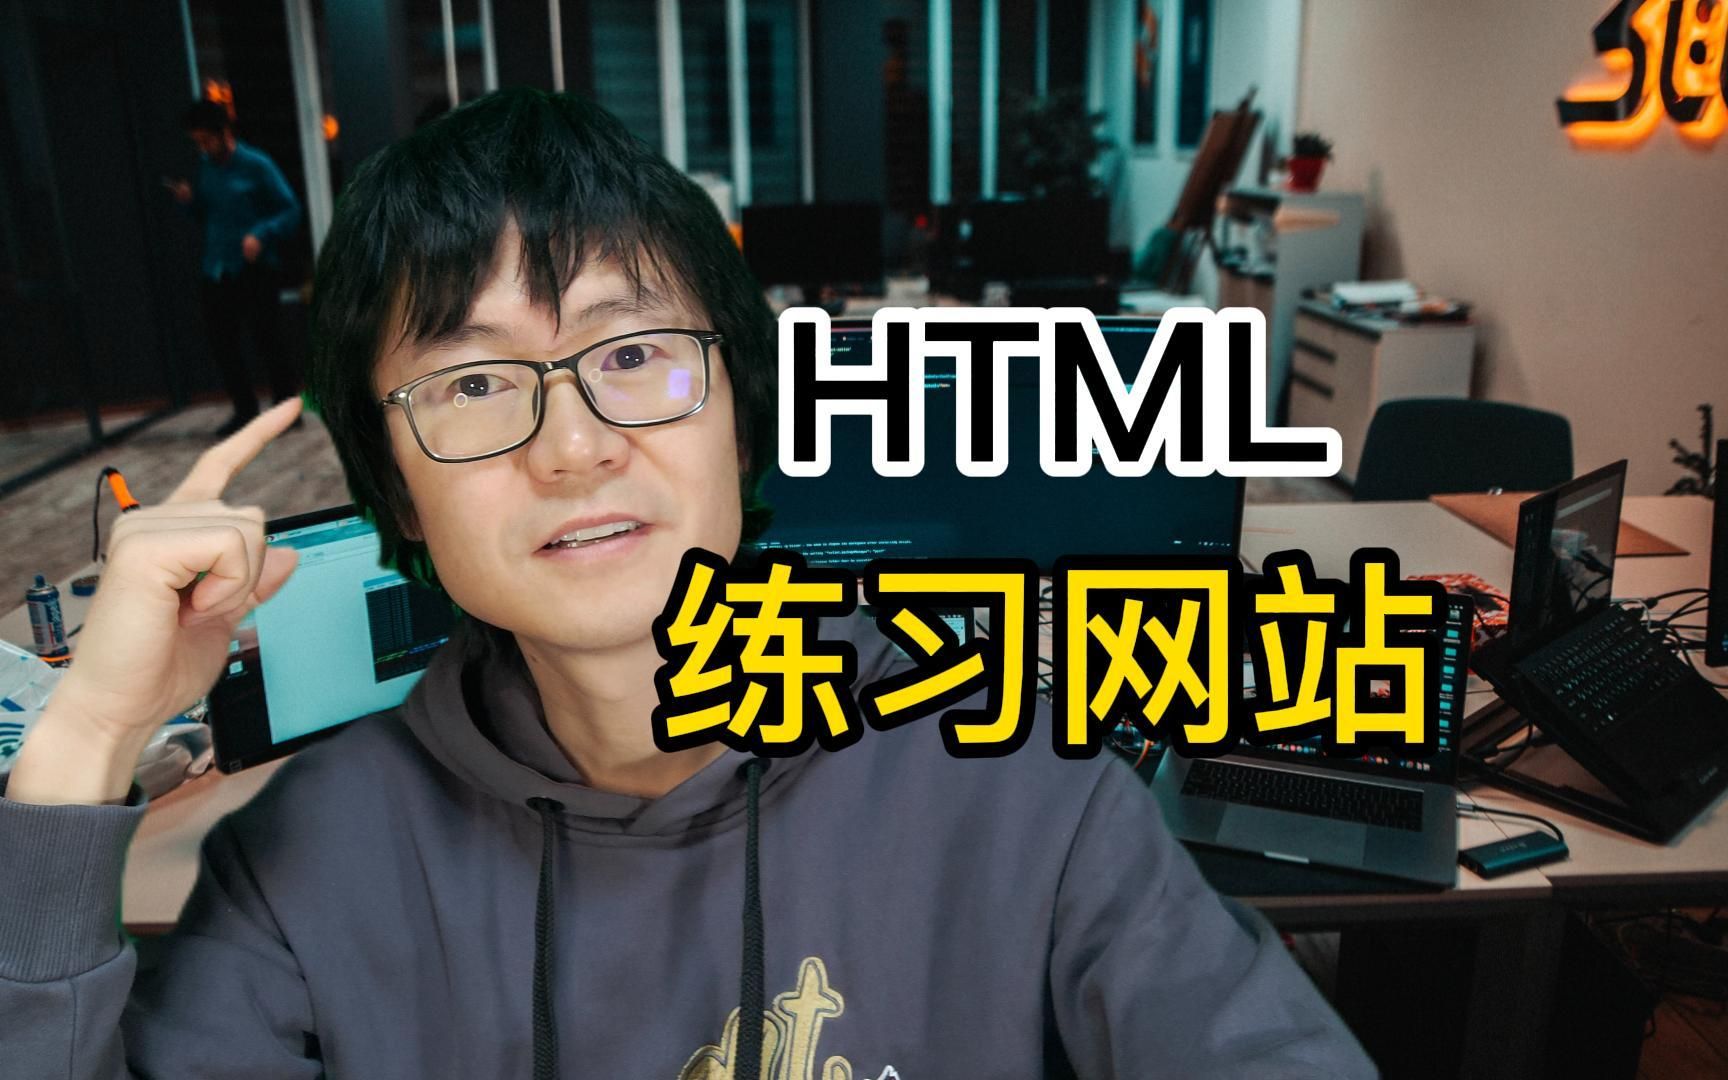 HTML练习网站